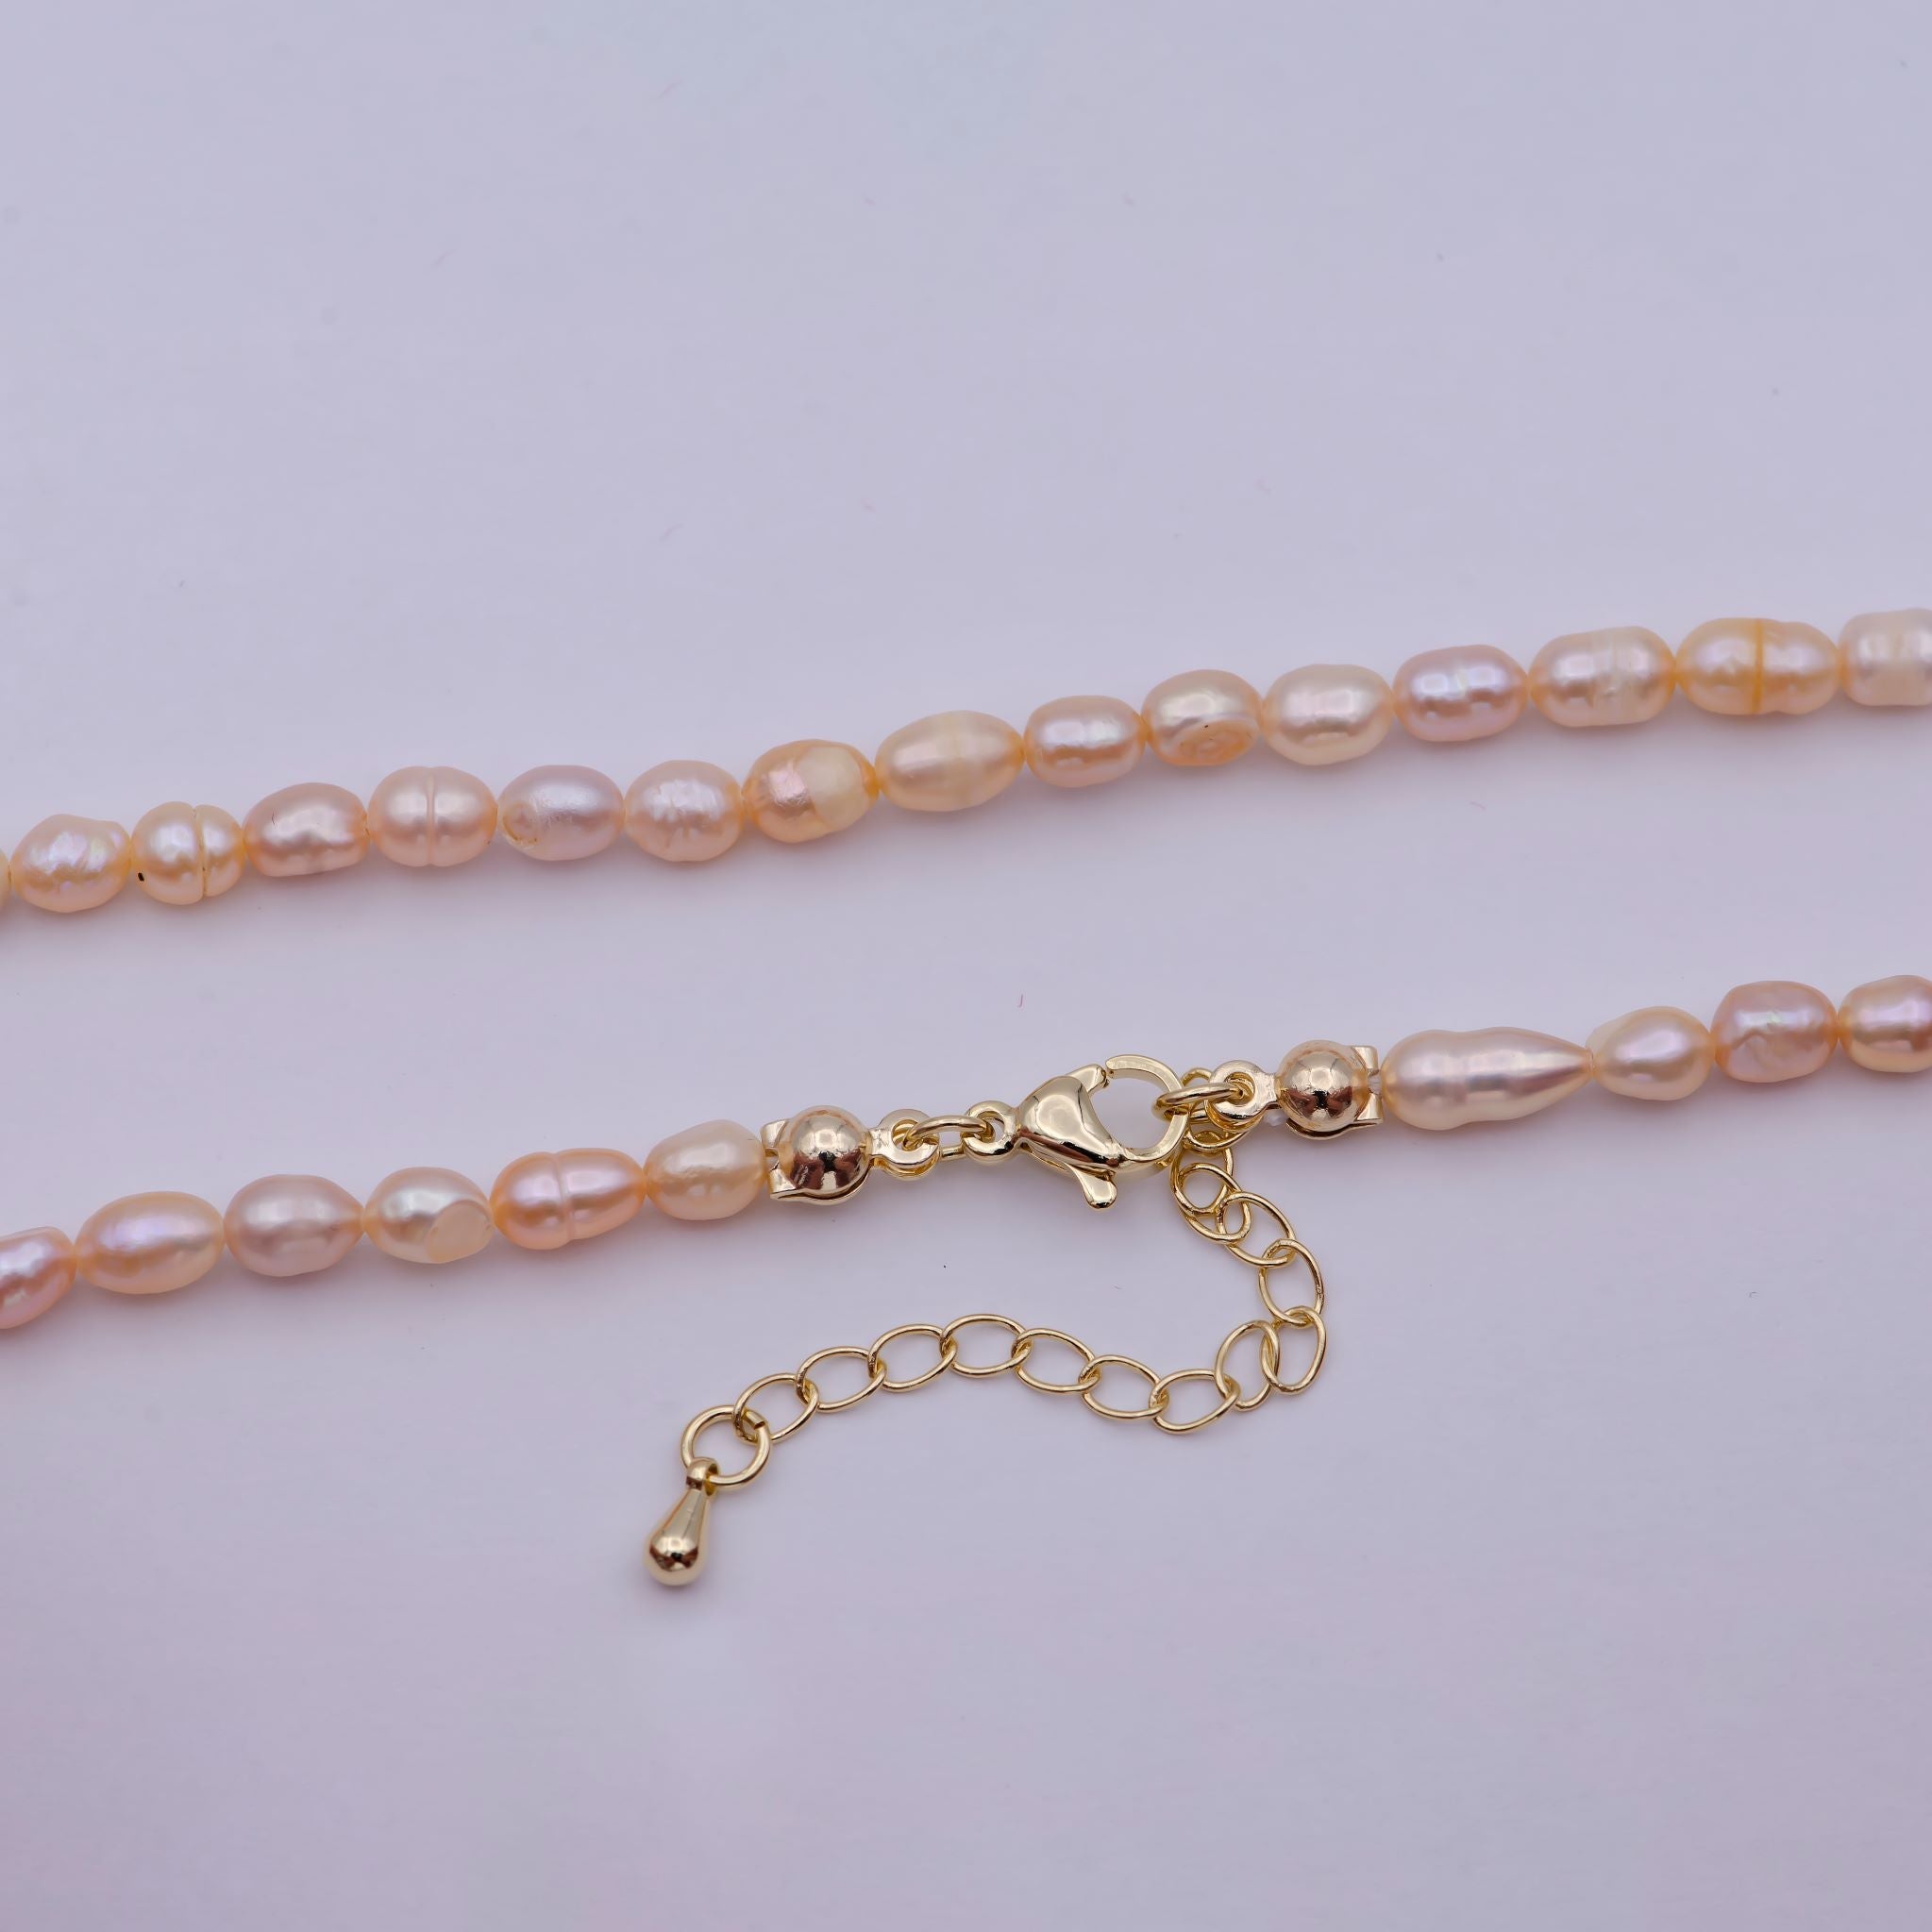 Dainty Pearl Necklace - Blush Peach Pink Bridal Wedding Jewelry - Bridesmaid Jewelry - Fresh Water Pearl Jewelry  WA-669 - DLUXCA